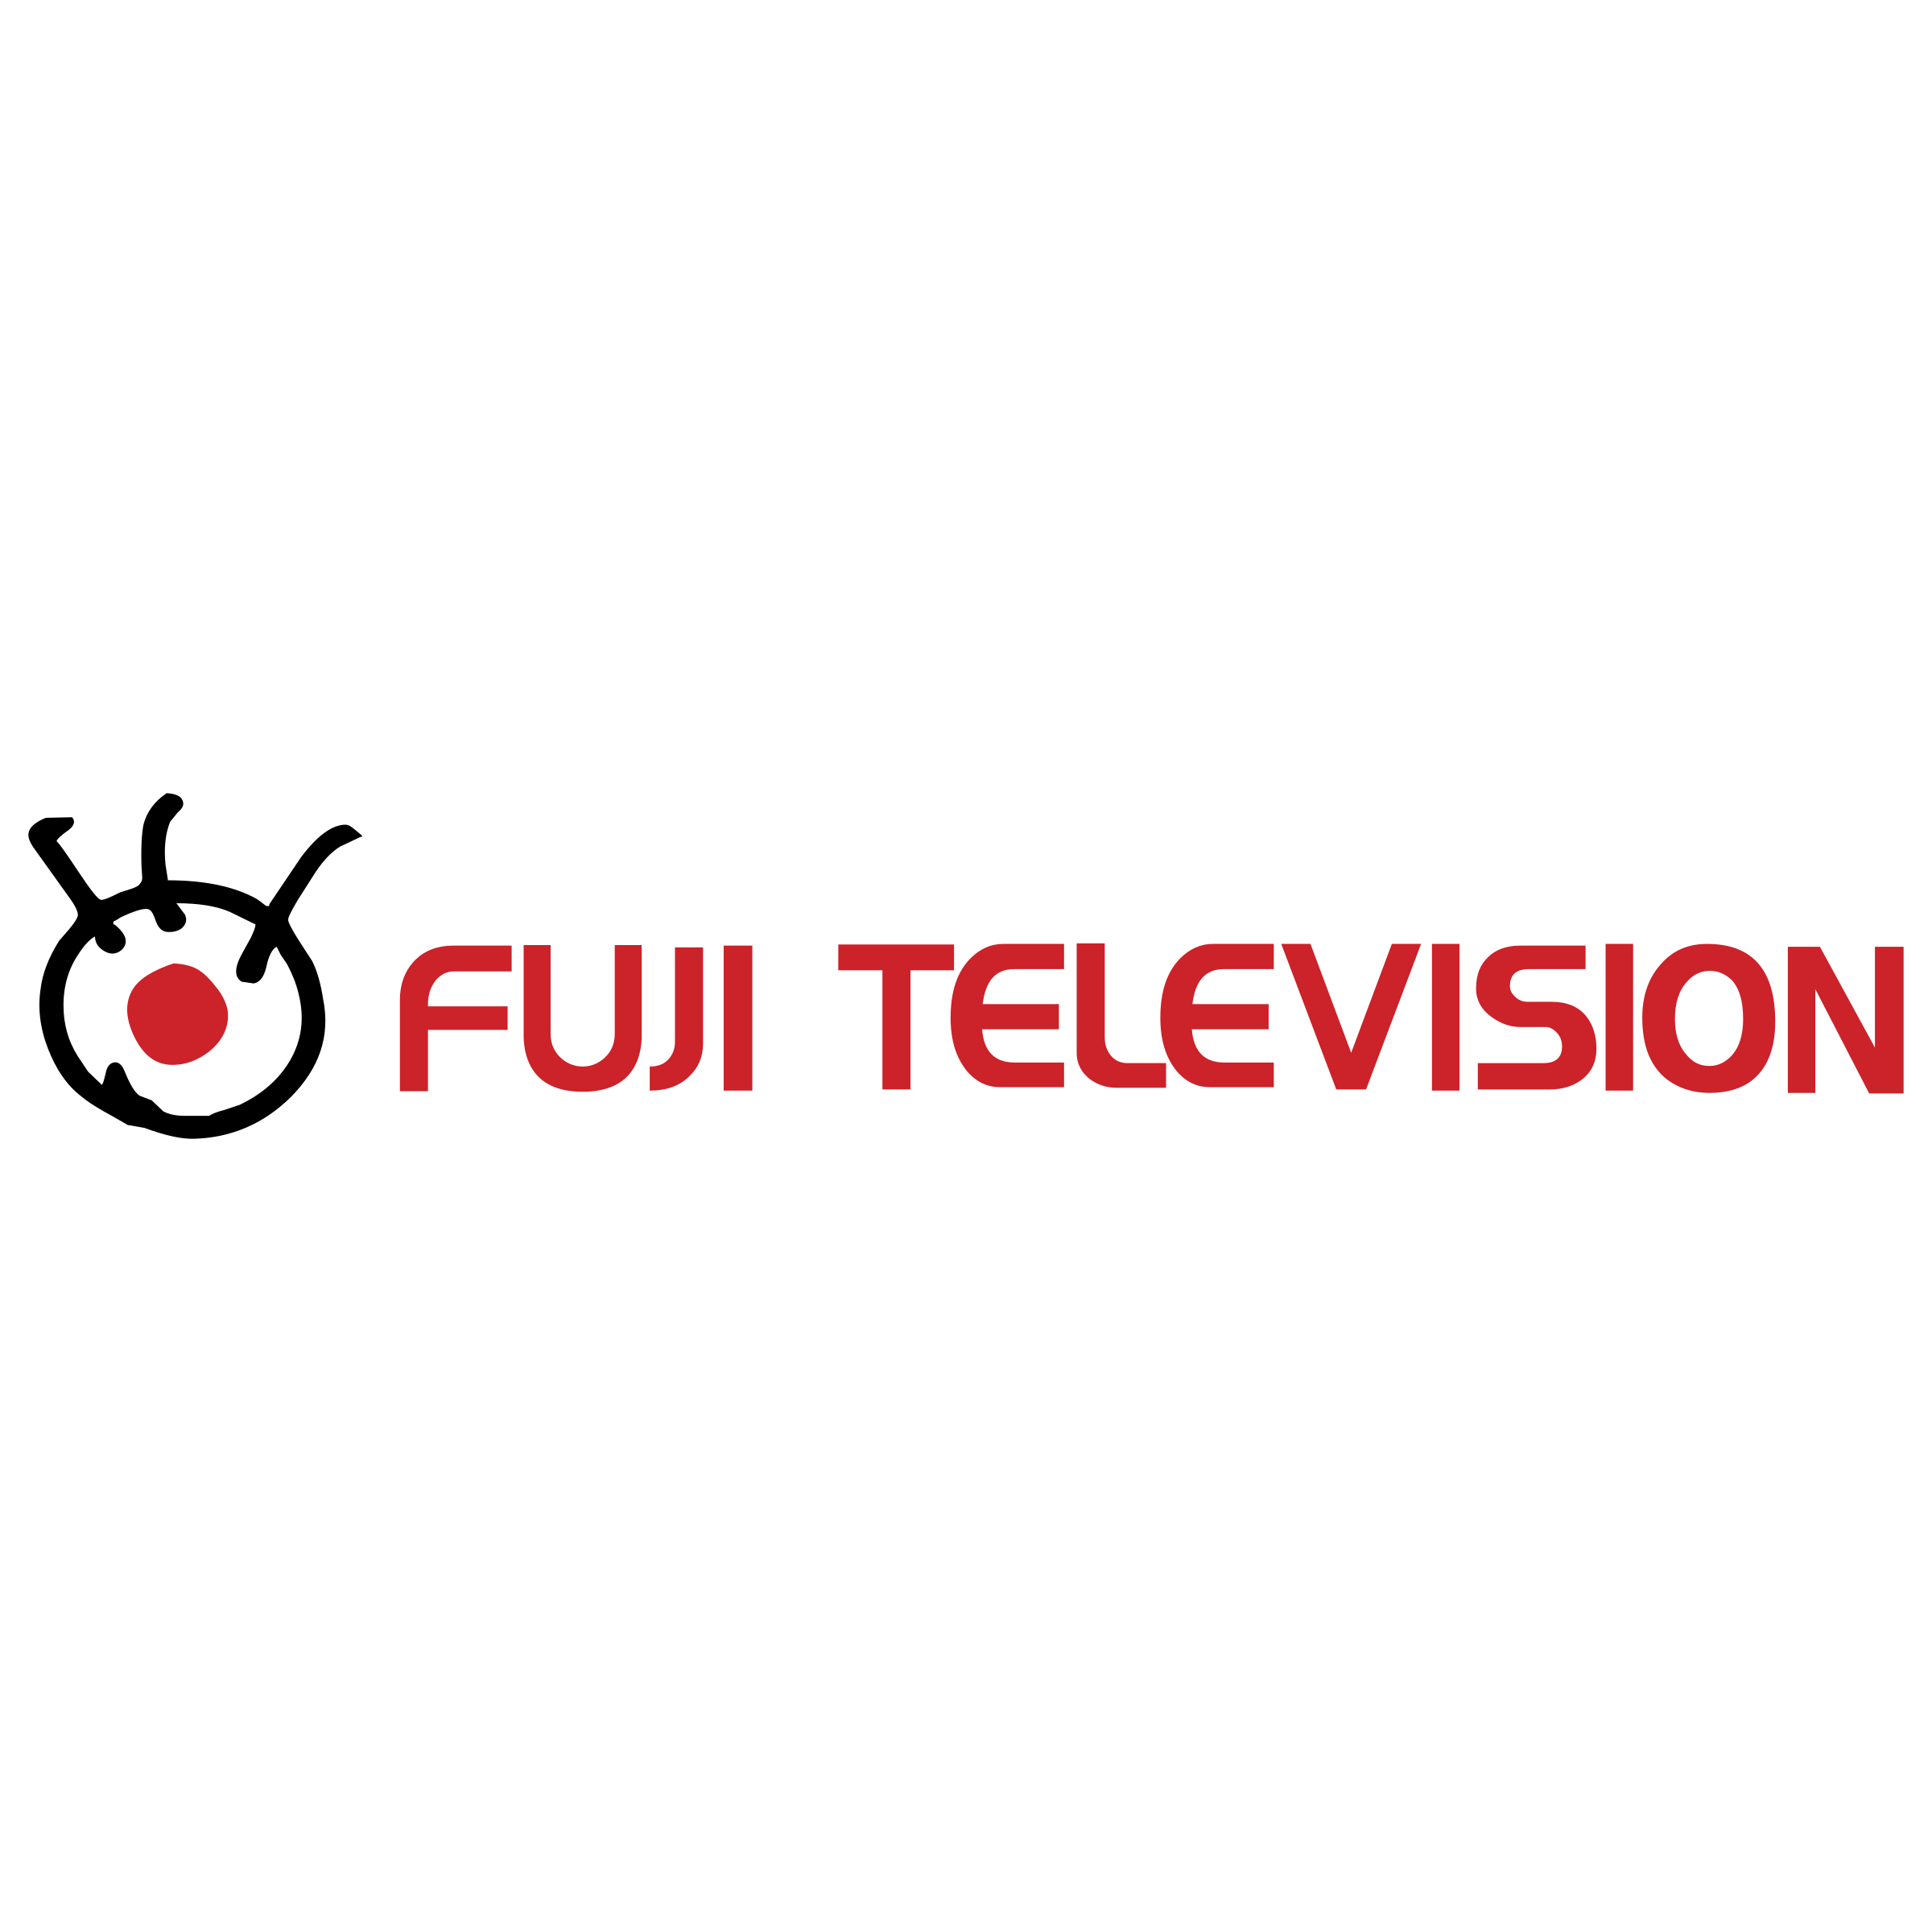 fuji-television-logo-png-transparent